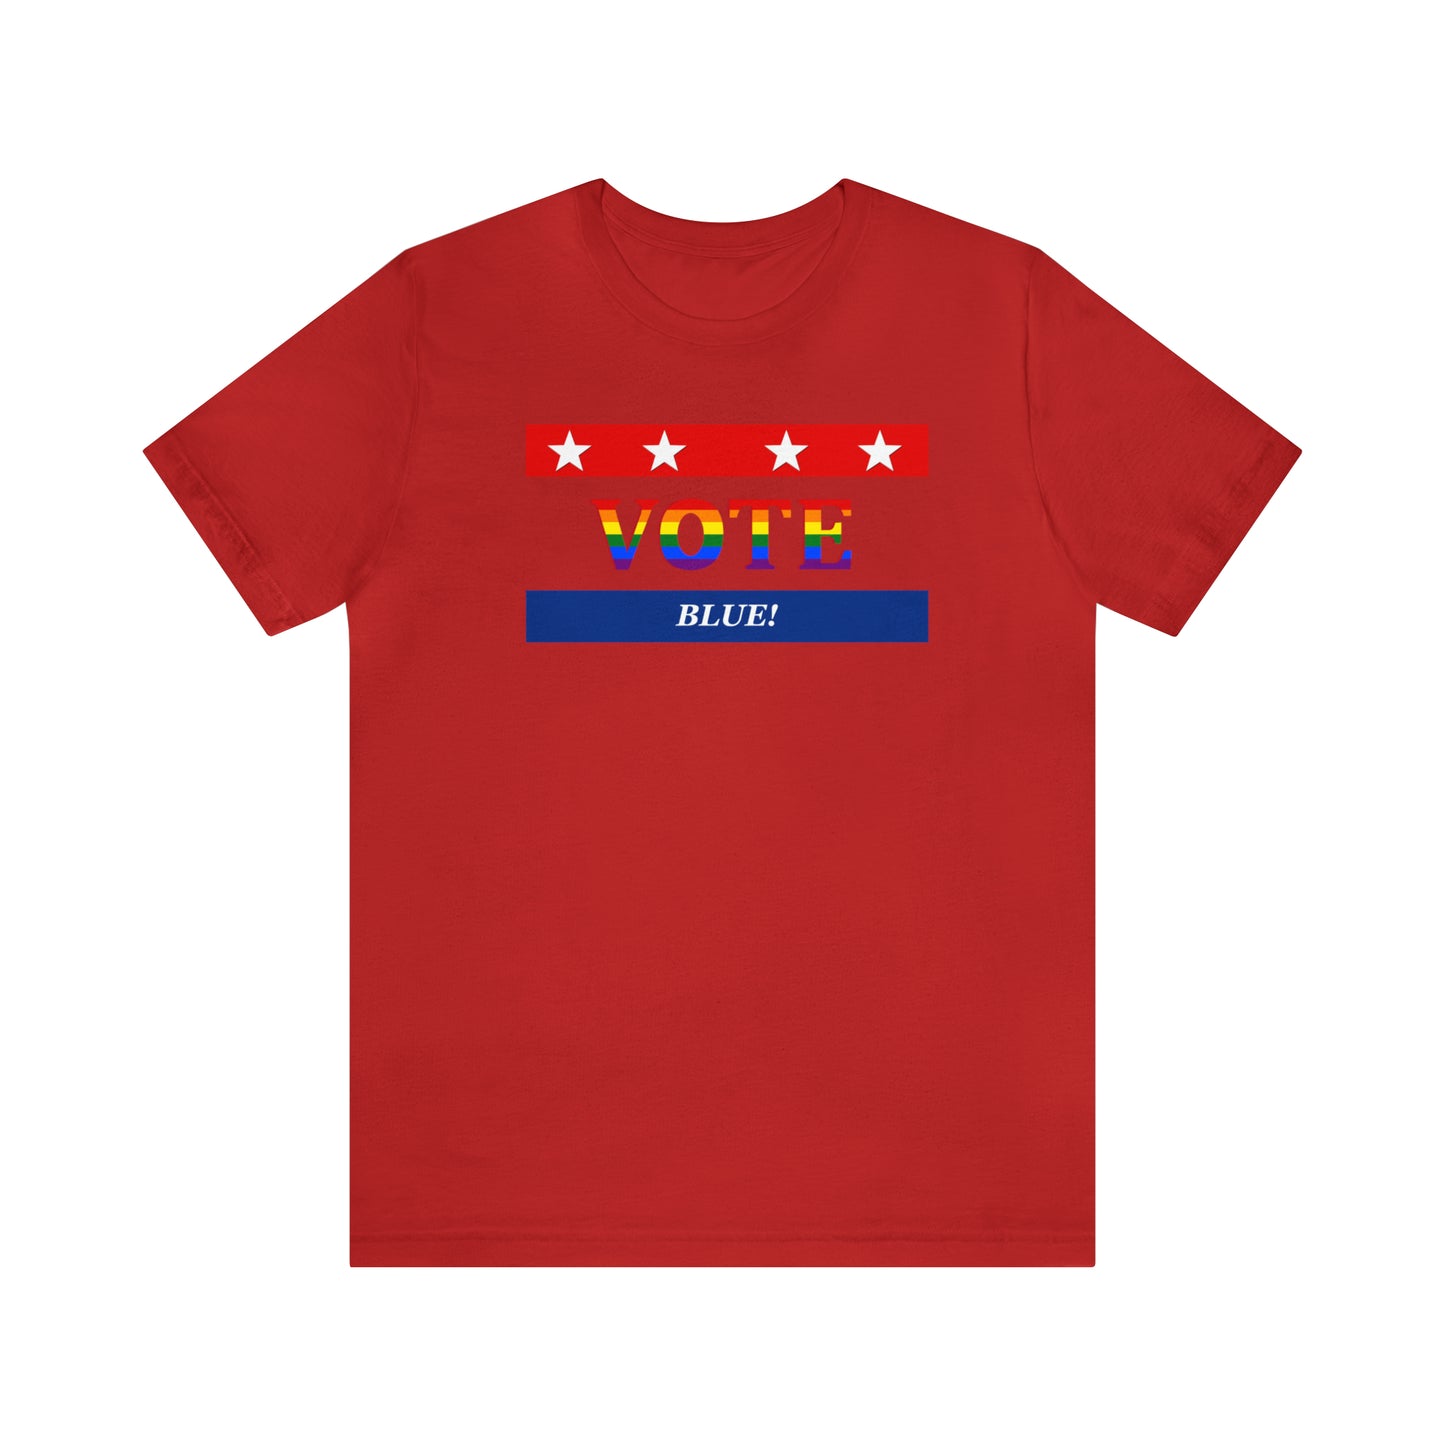 Rainbow VOTE Blue Unisex Short Sleeve T-Shirt